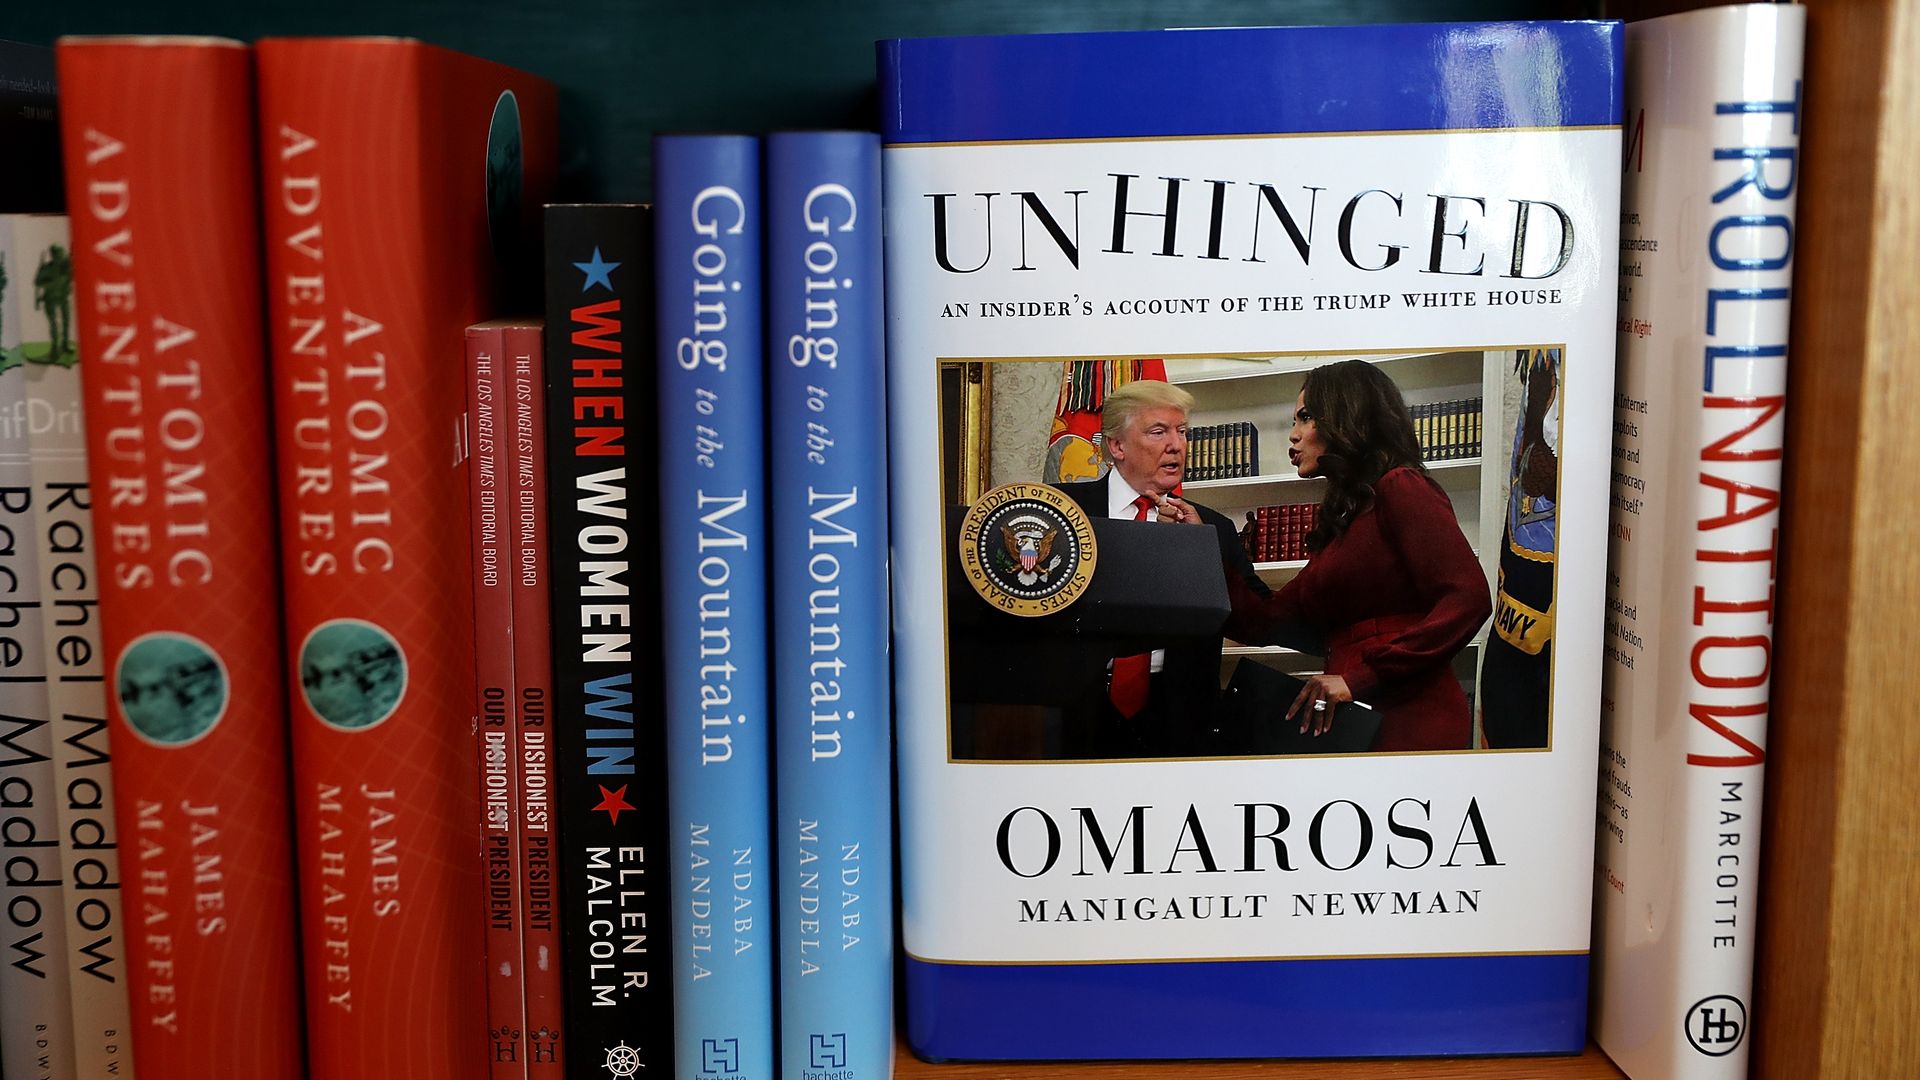 Omarosa's new book on a book shelf.